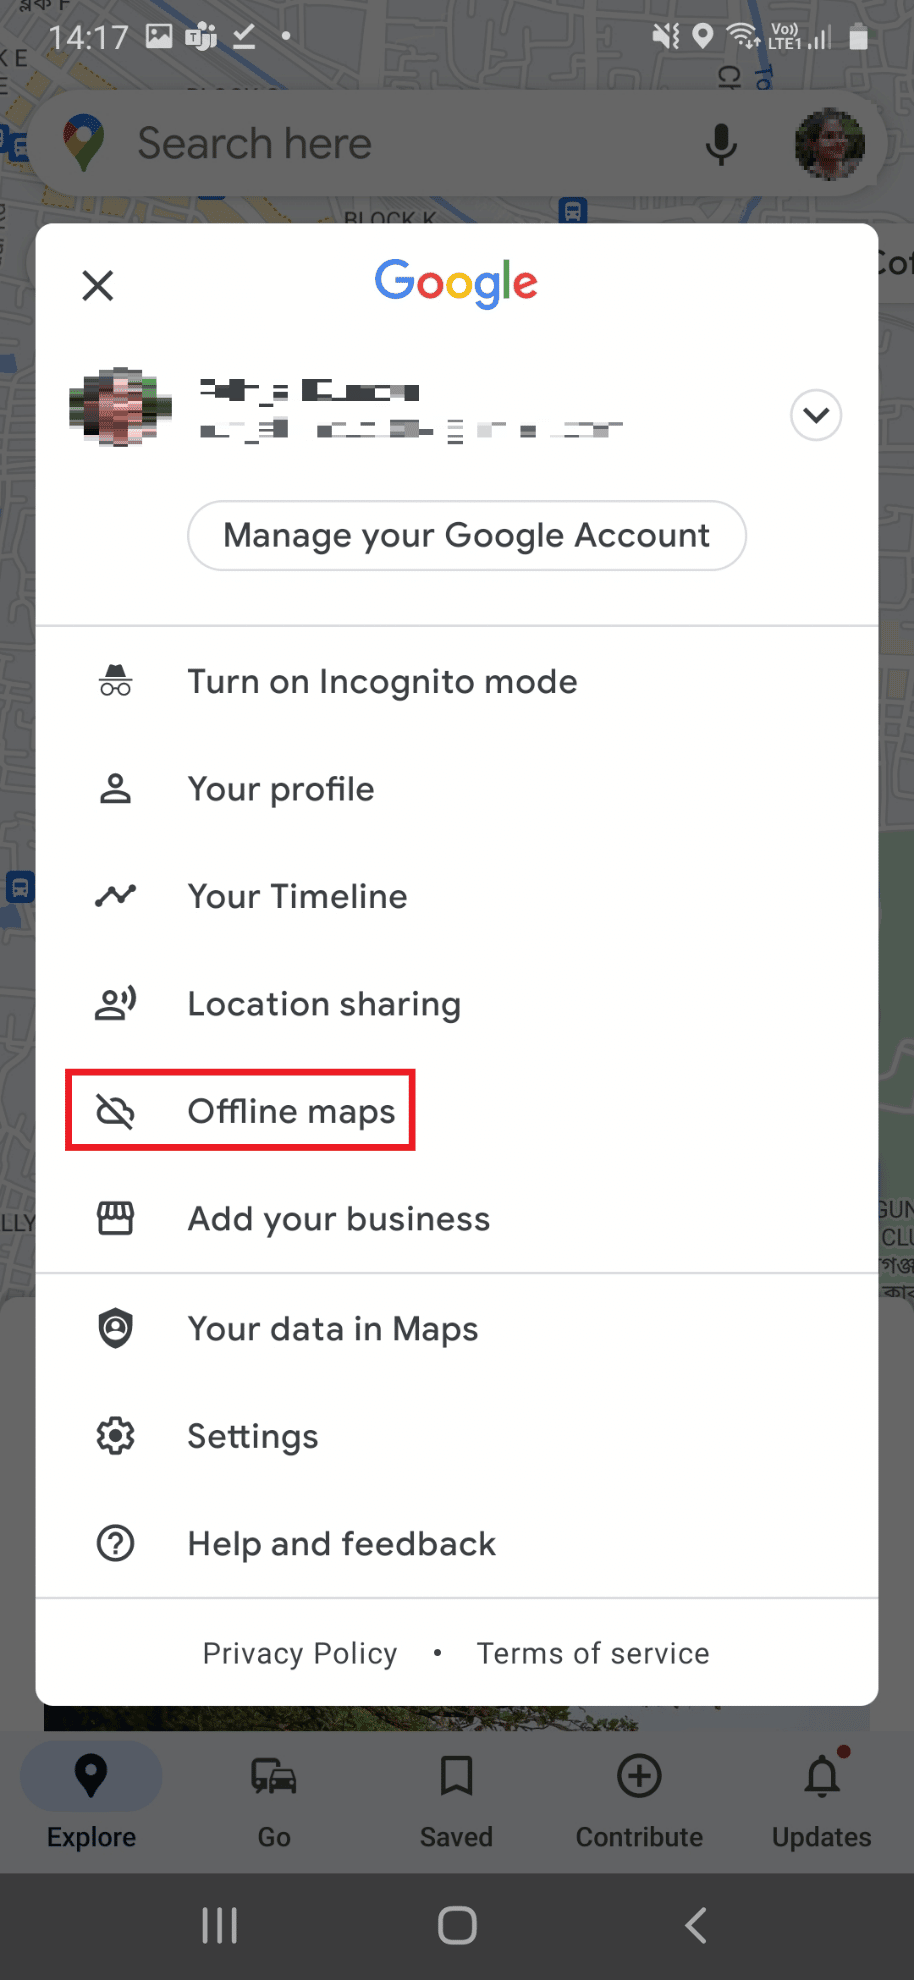 select Offline Maps